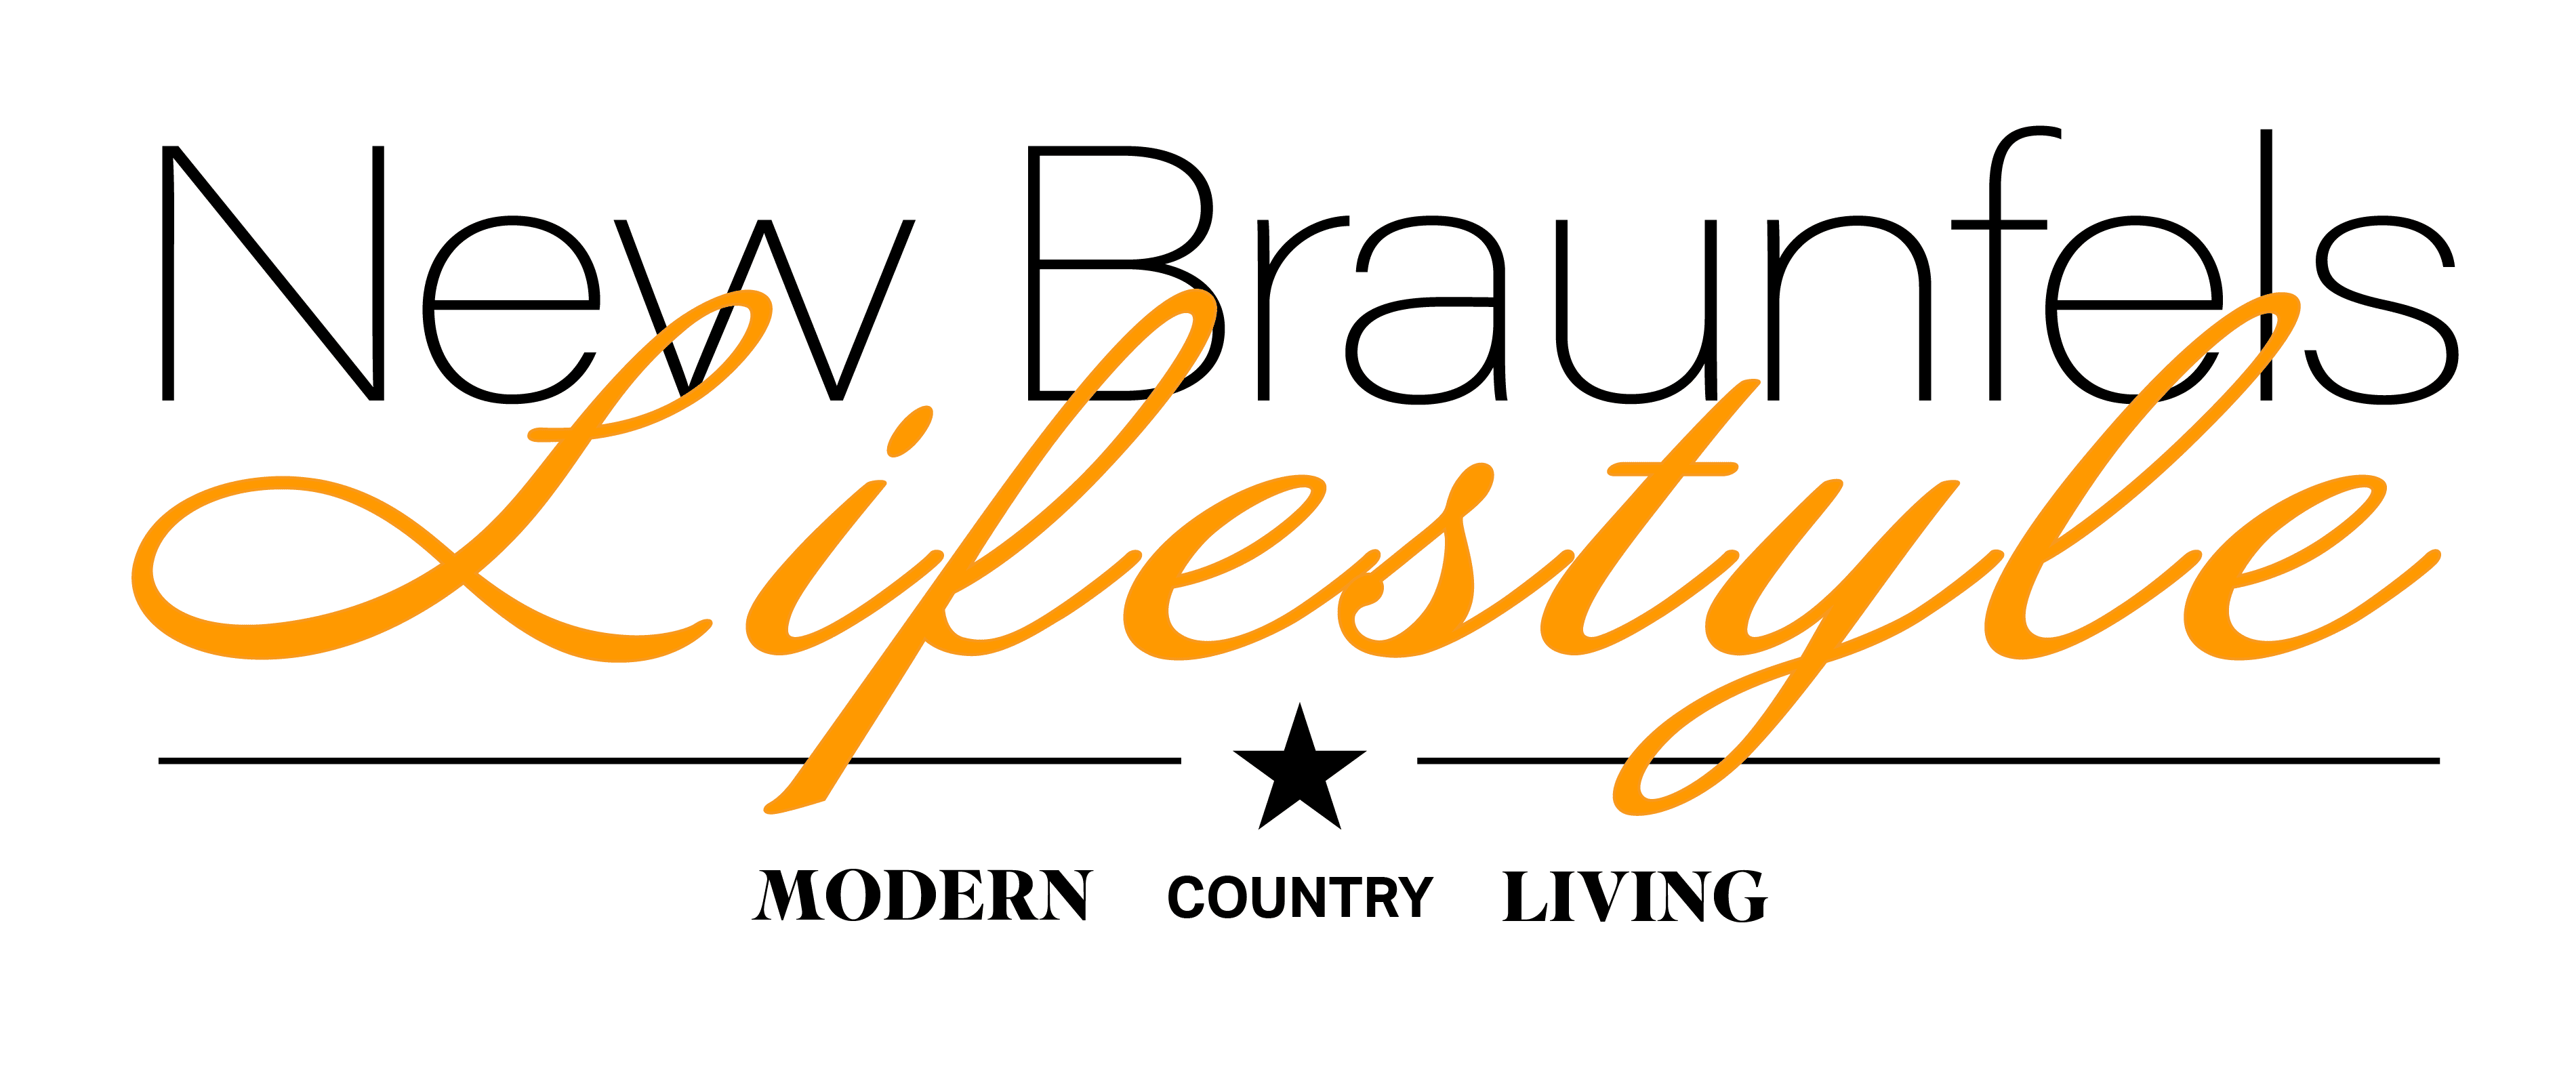 New Braunfels Lifestyle Magazine